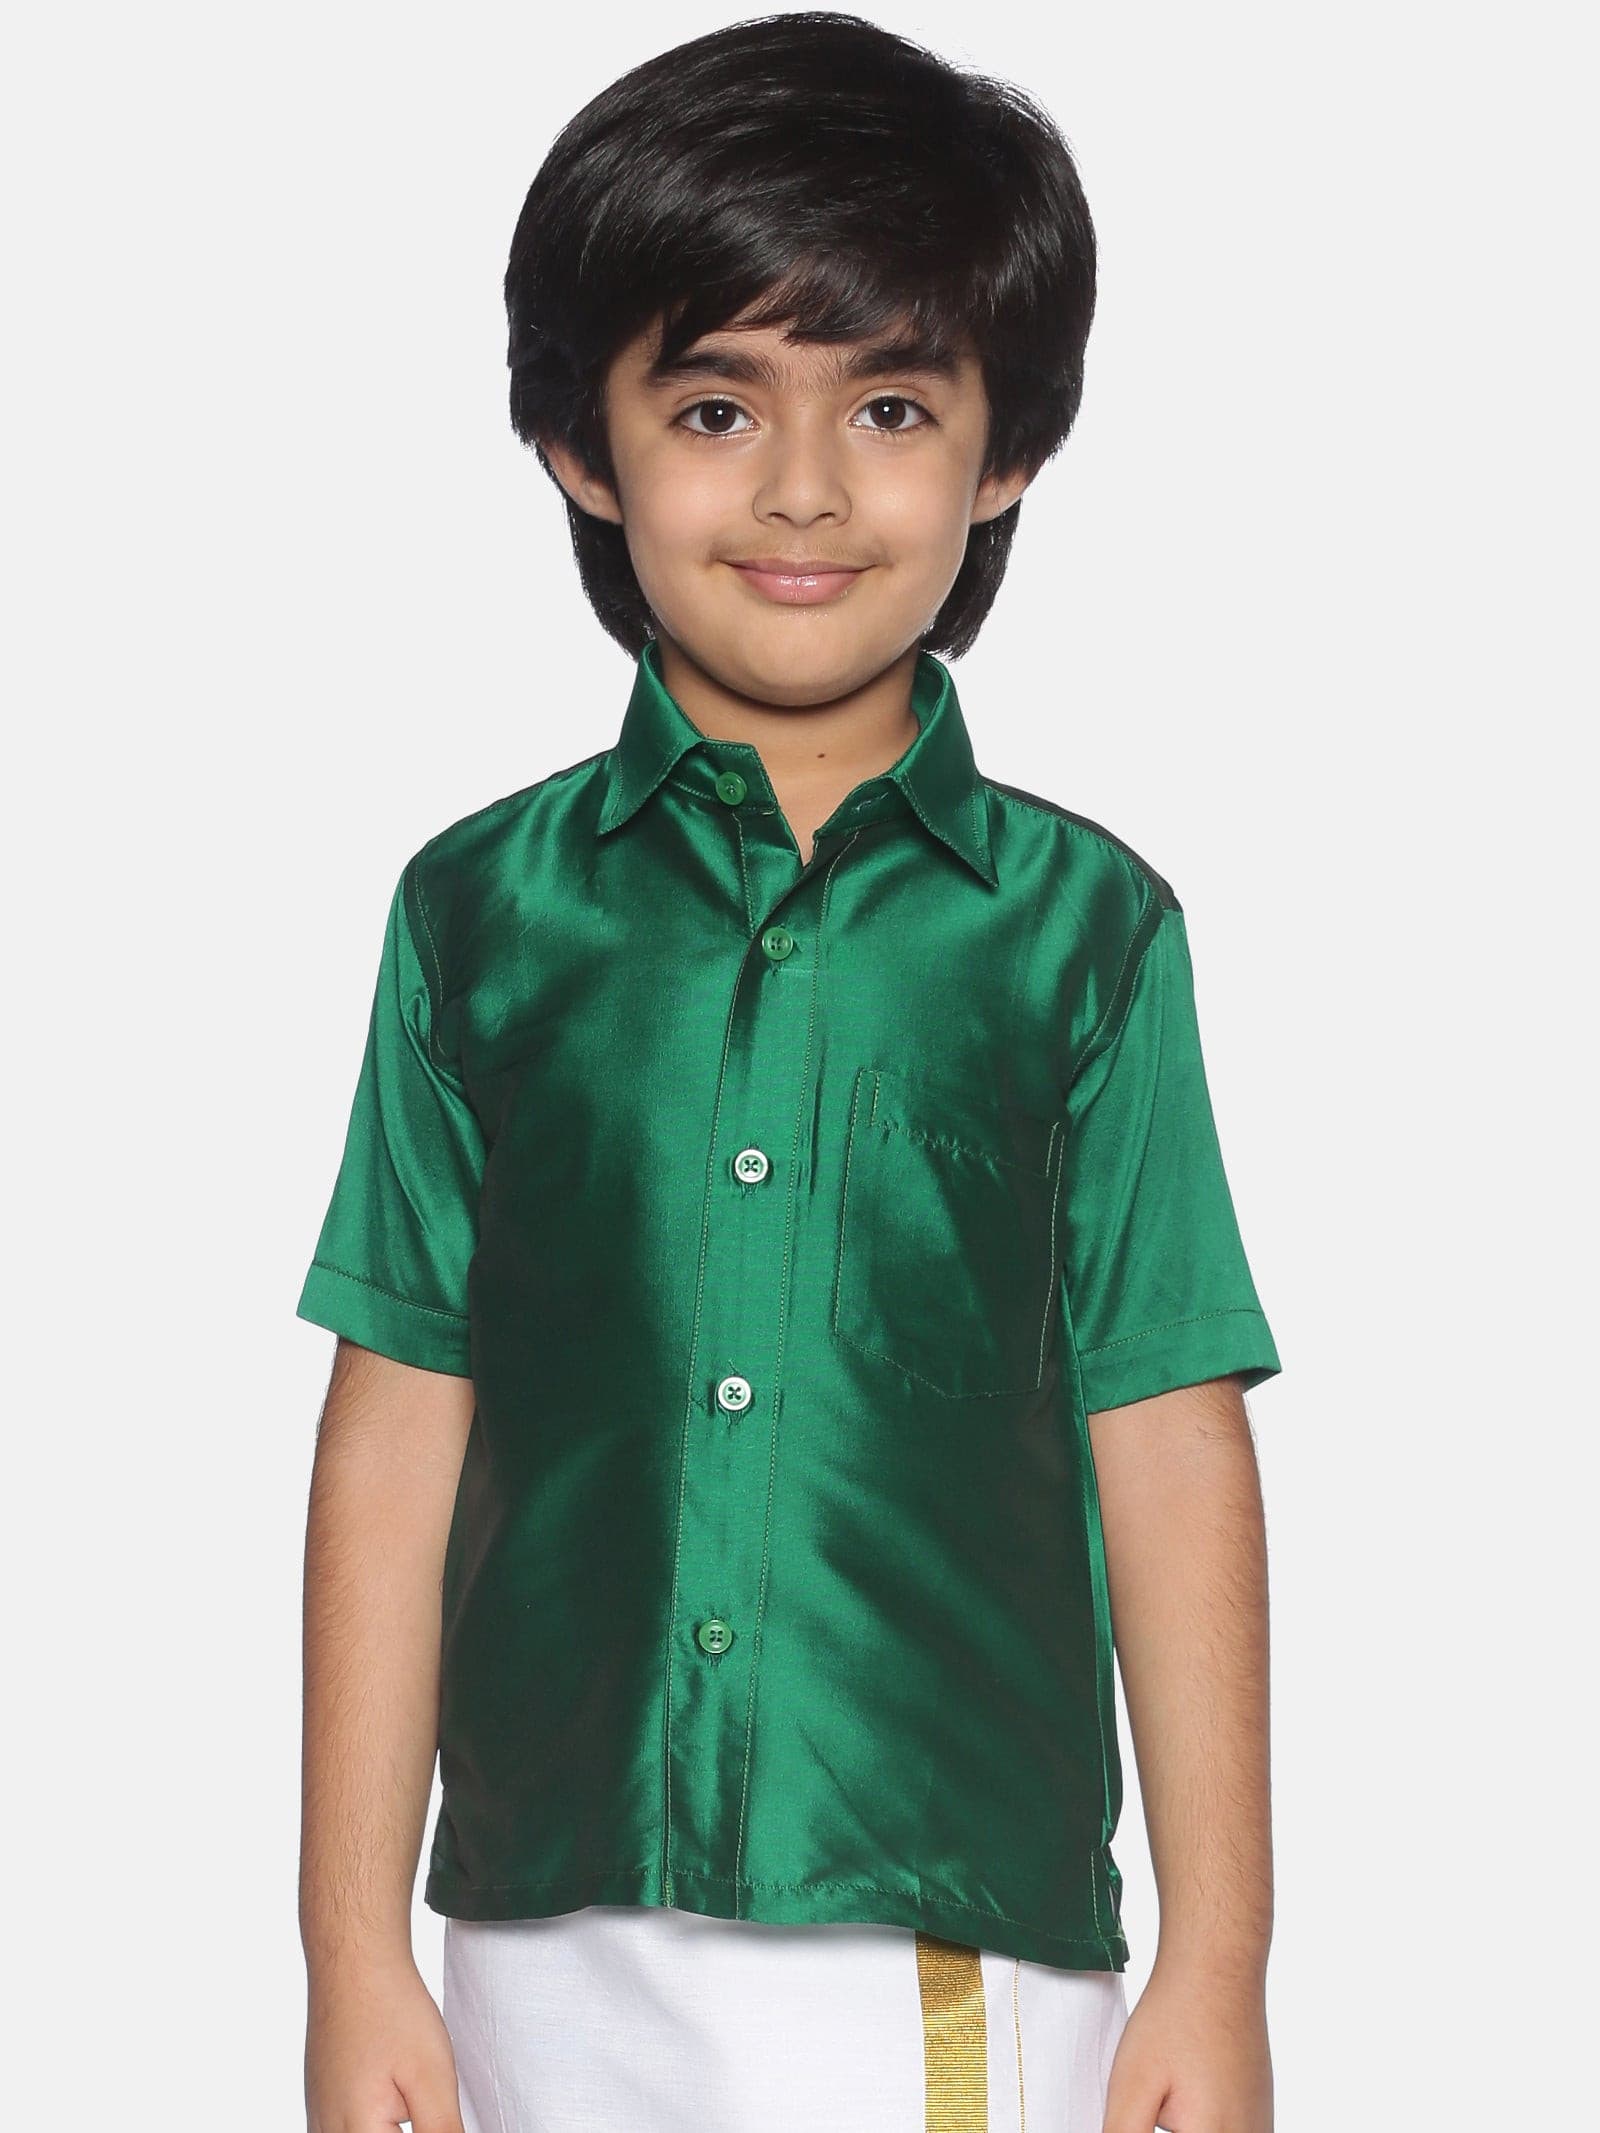 Boys Green Colour Ethnic Shirt